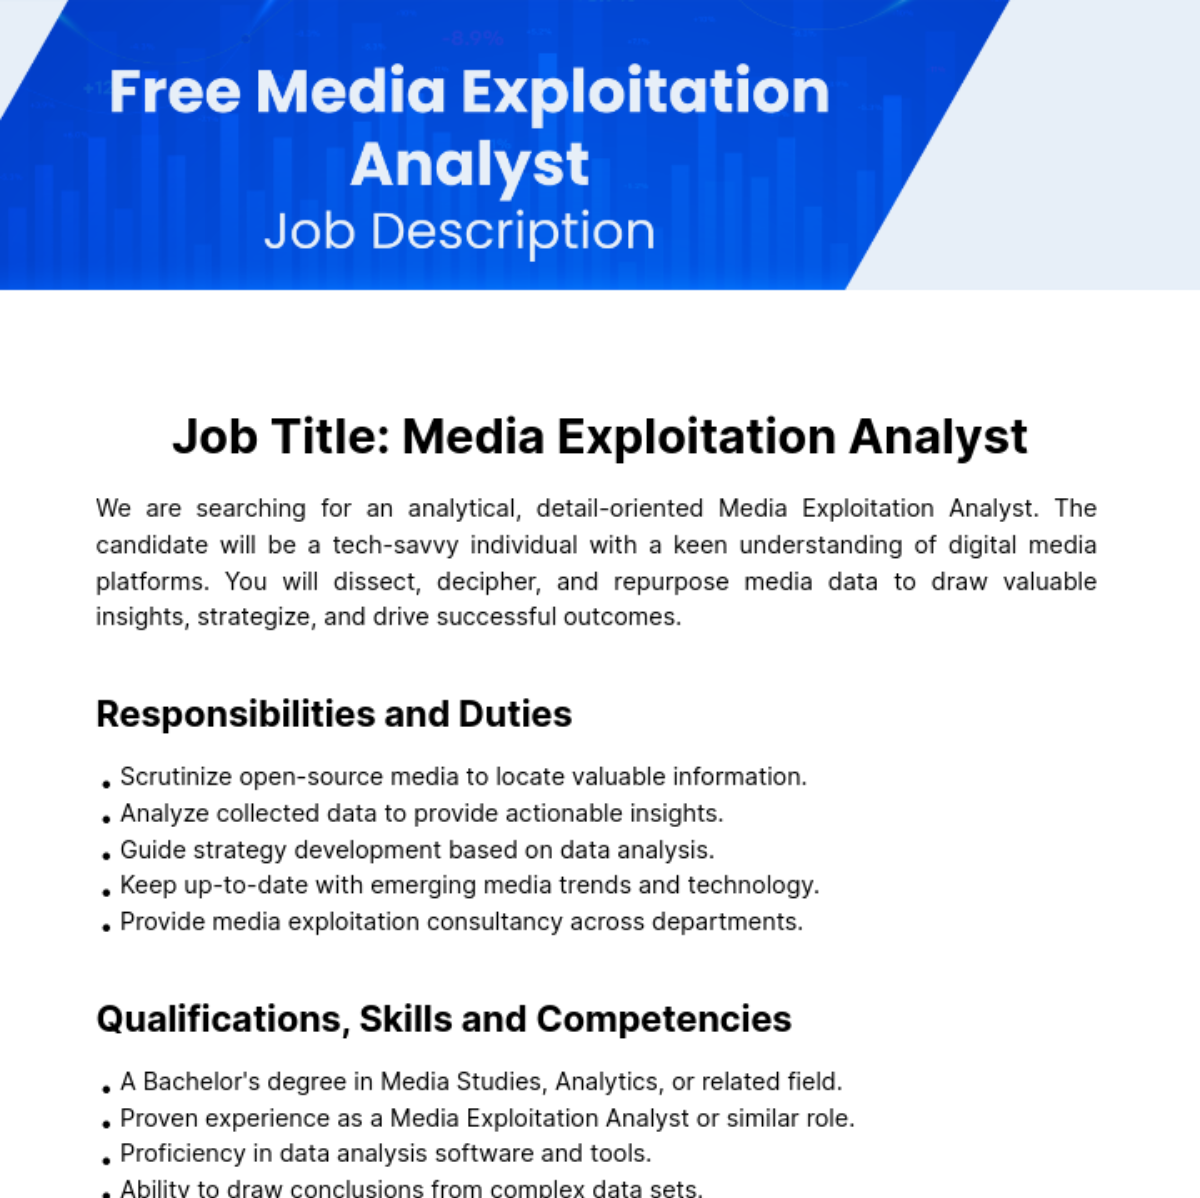 Free Media Exploitation Analyst Job Description Template